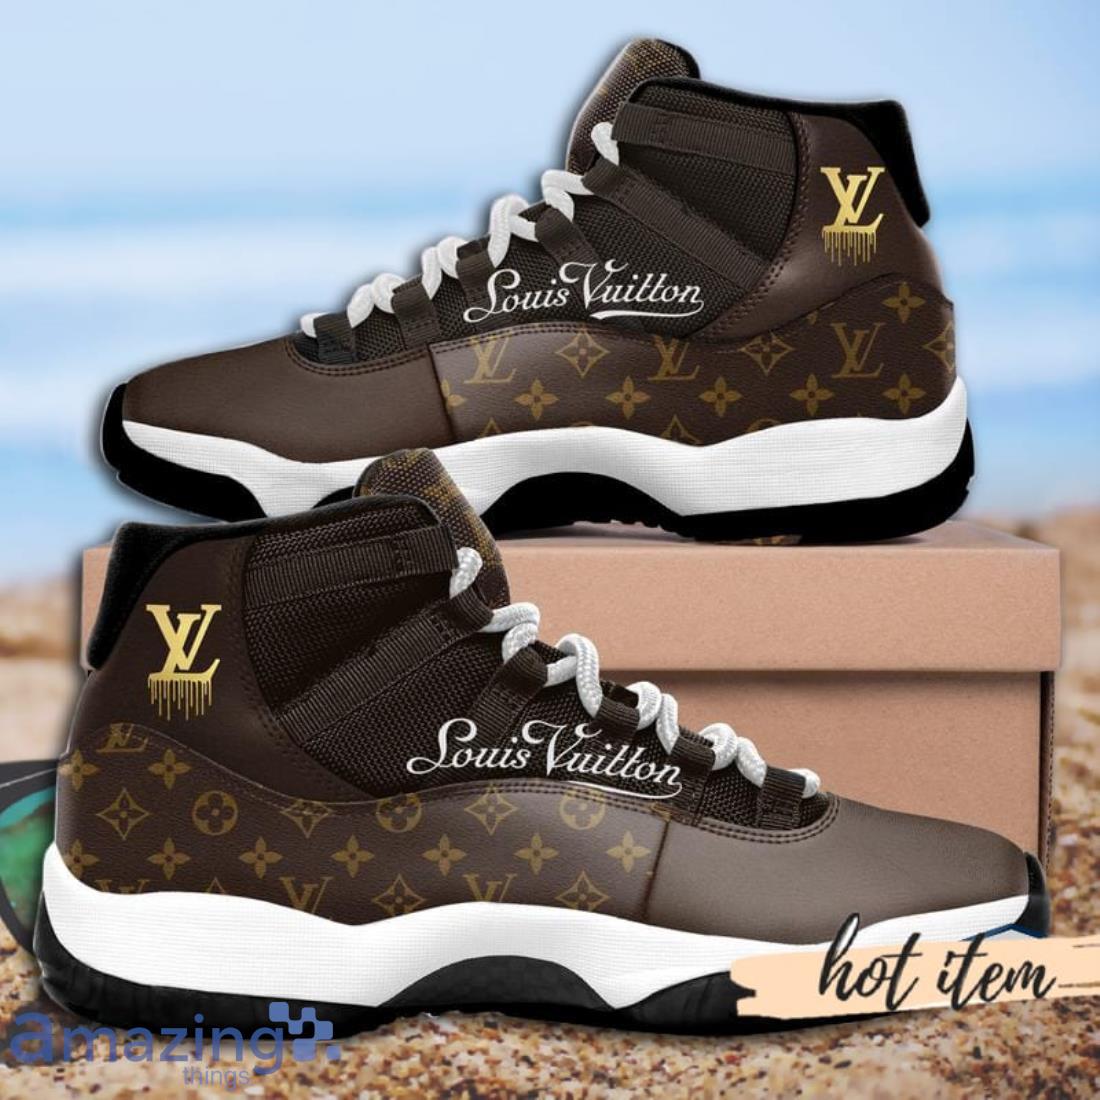 Louis Vuitton Air Jordan 11 Shoes